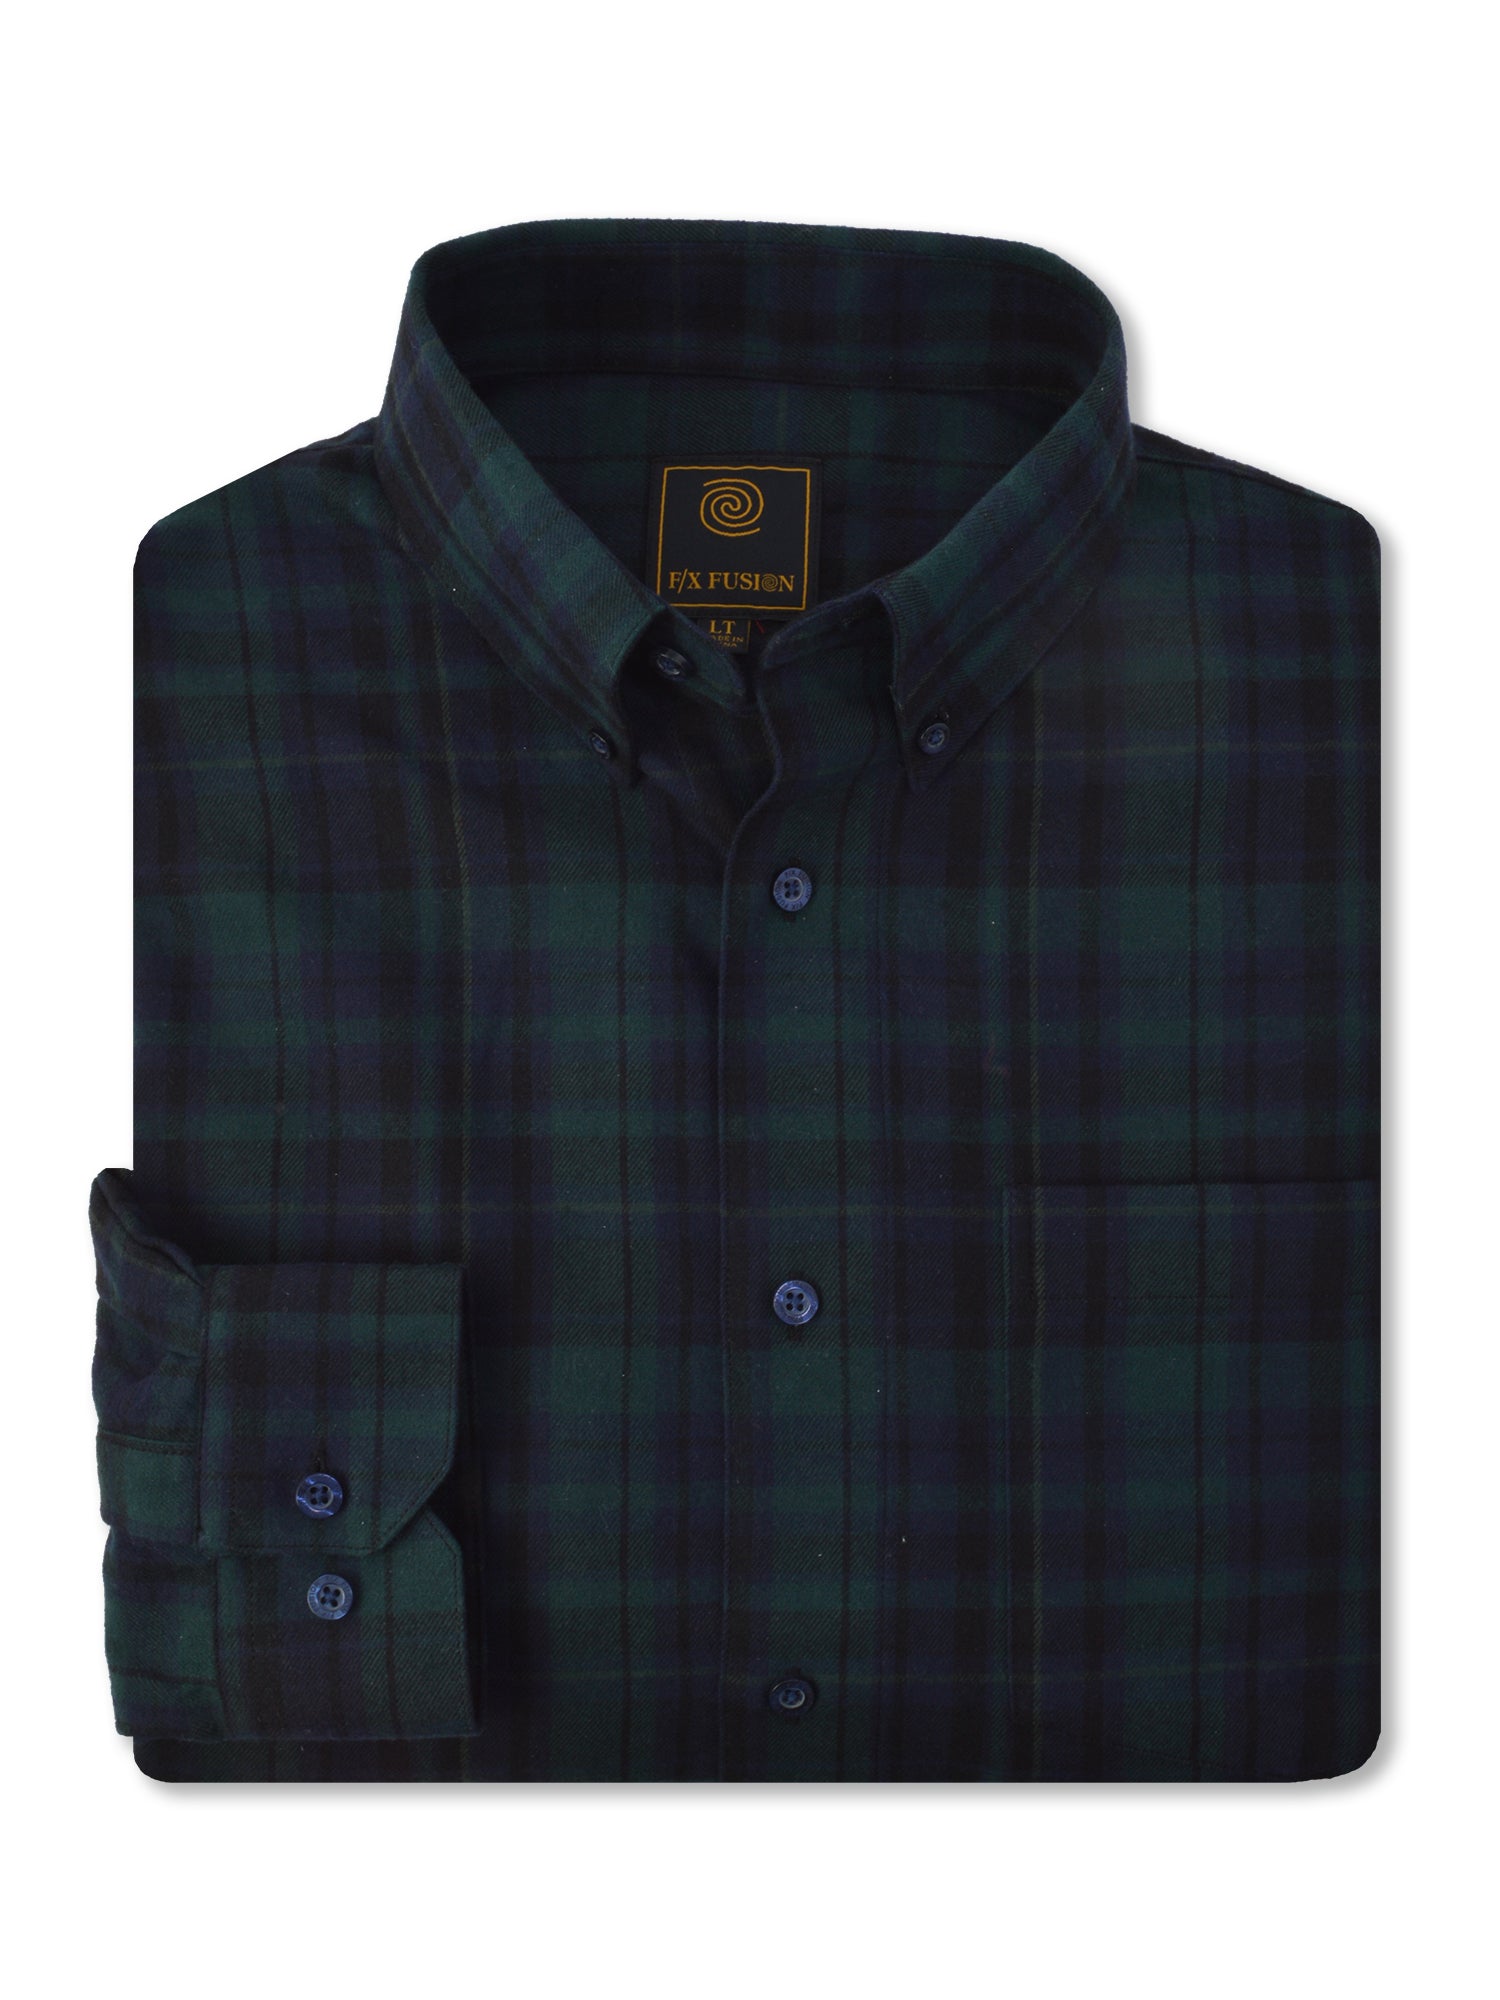 F/X Fusion Flannel Plaid Shirt in Green - Tall Man Sizes